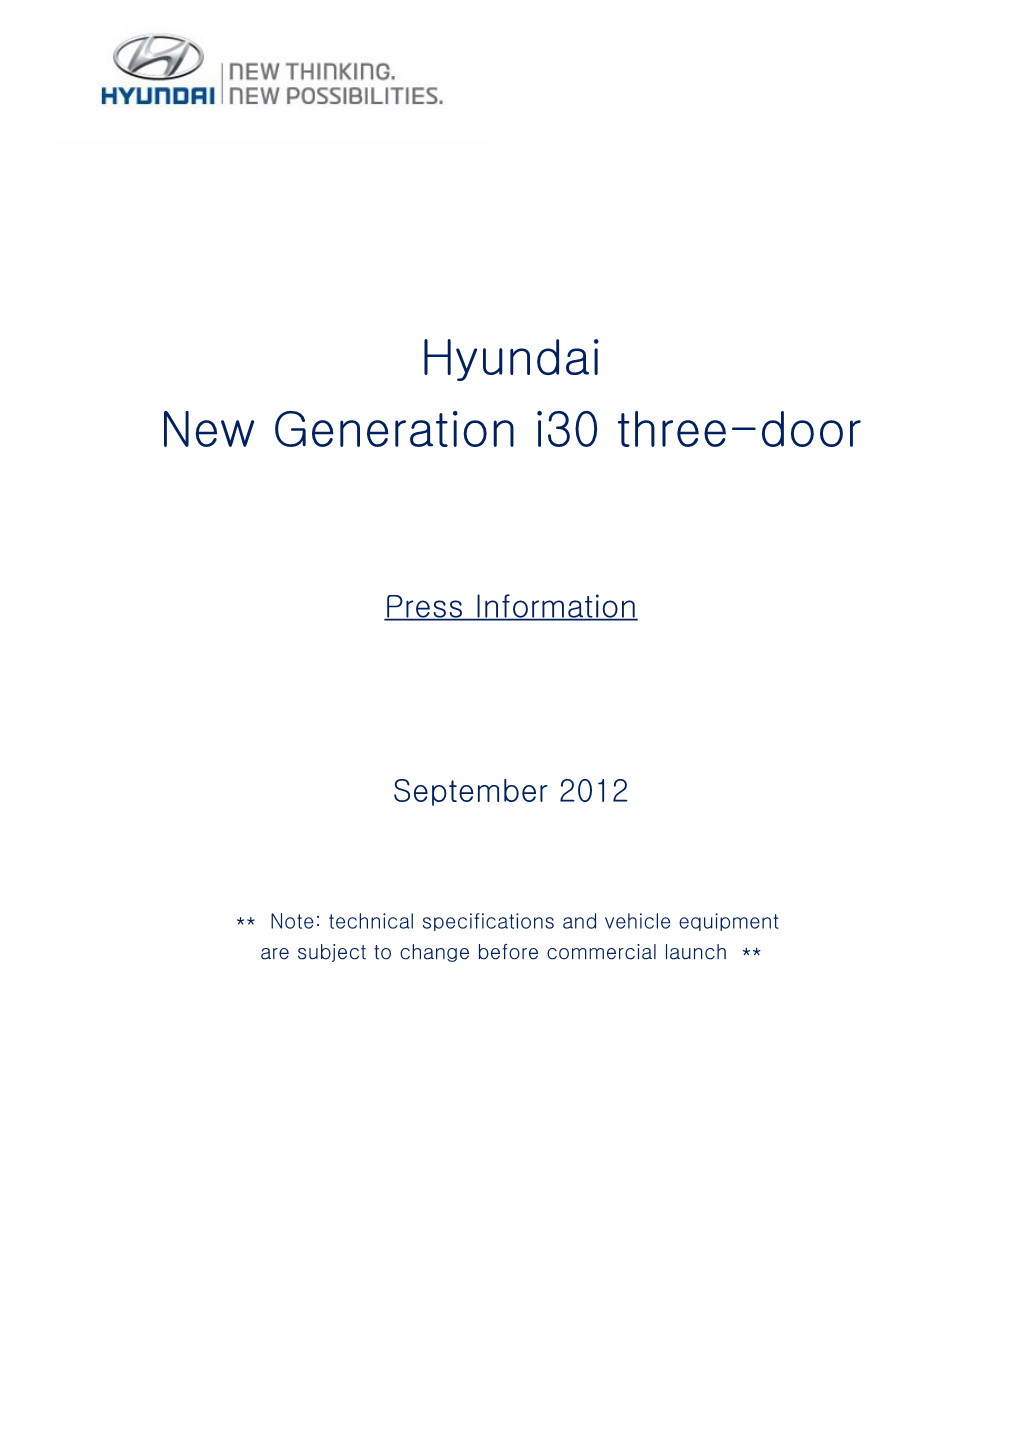 New Generation I30 Three-Door